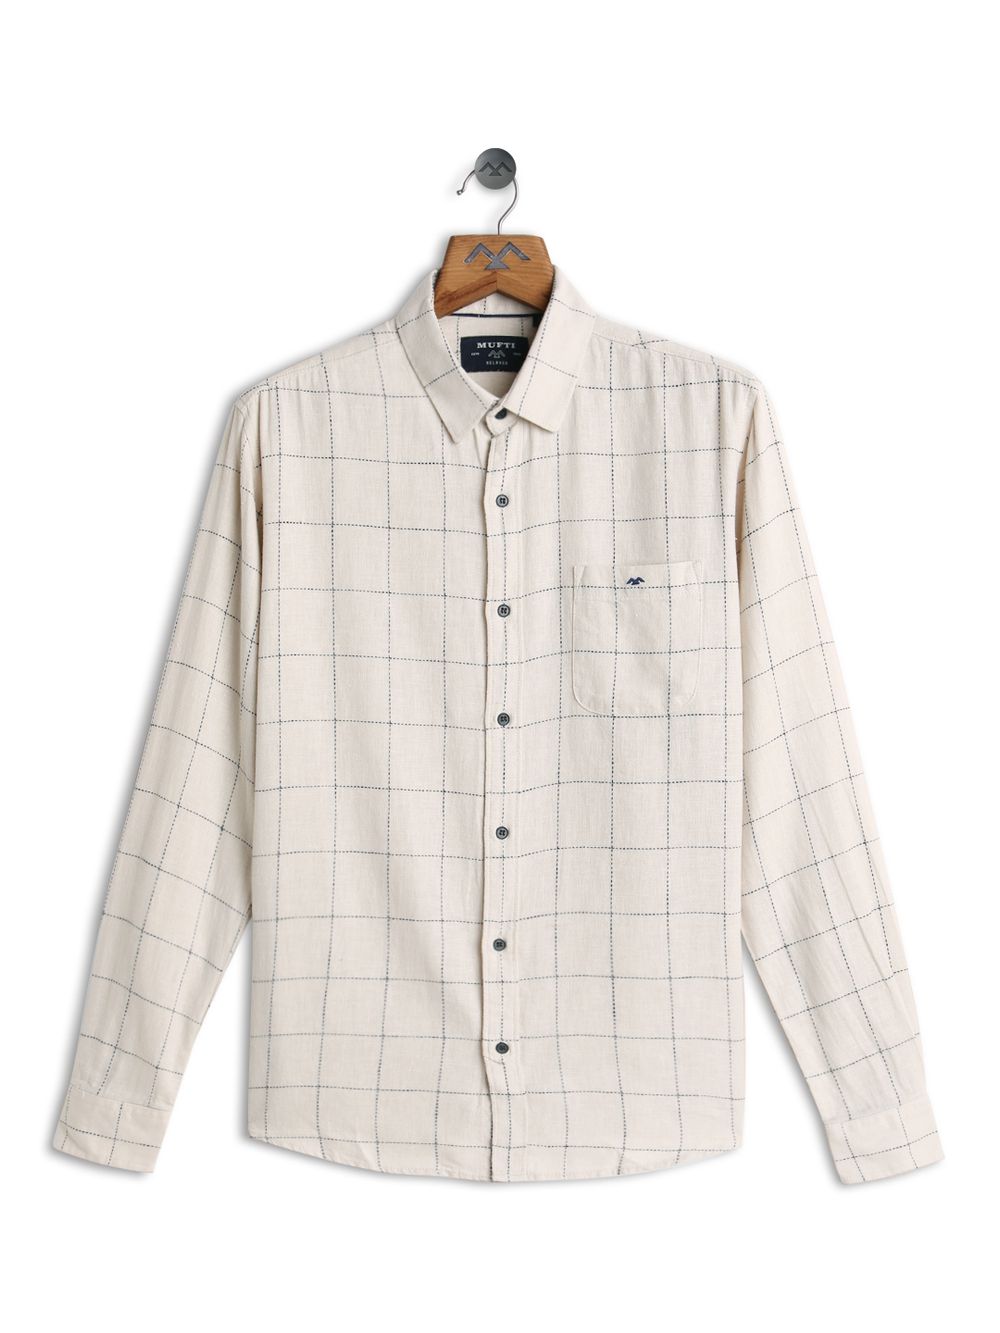 Off White & Navy Windowpane Check Slim Fit Casual Shirt